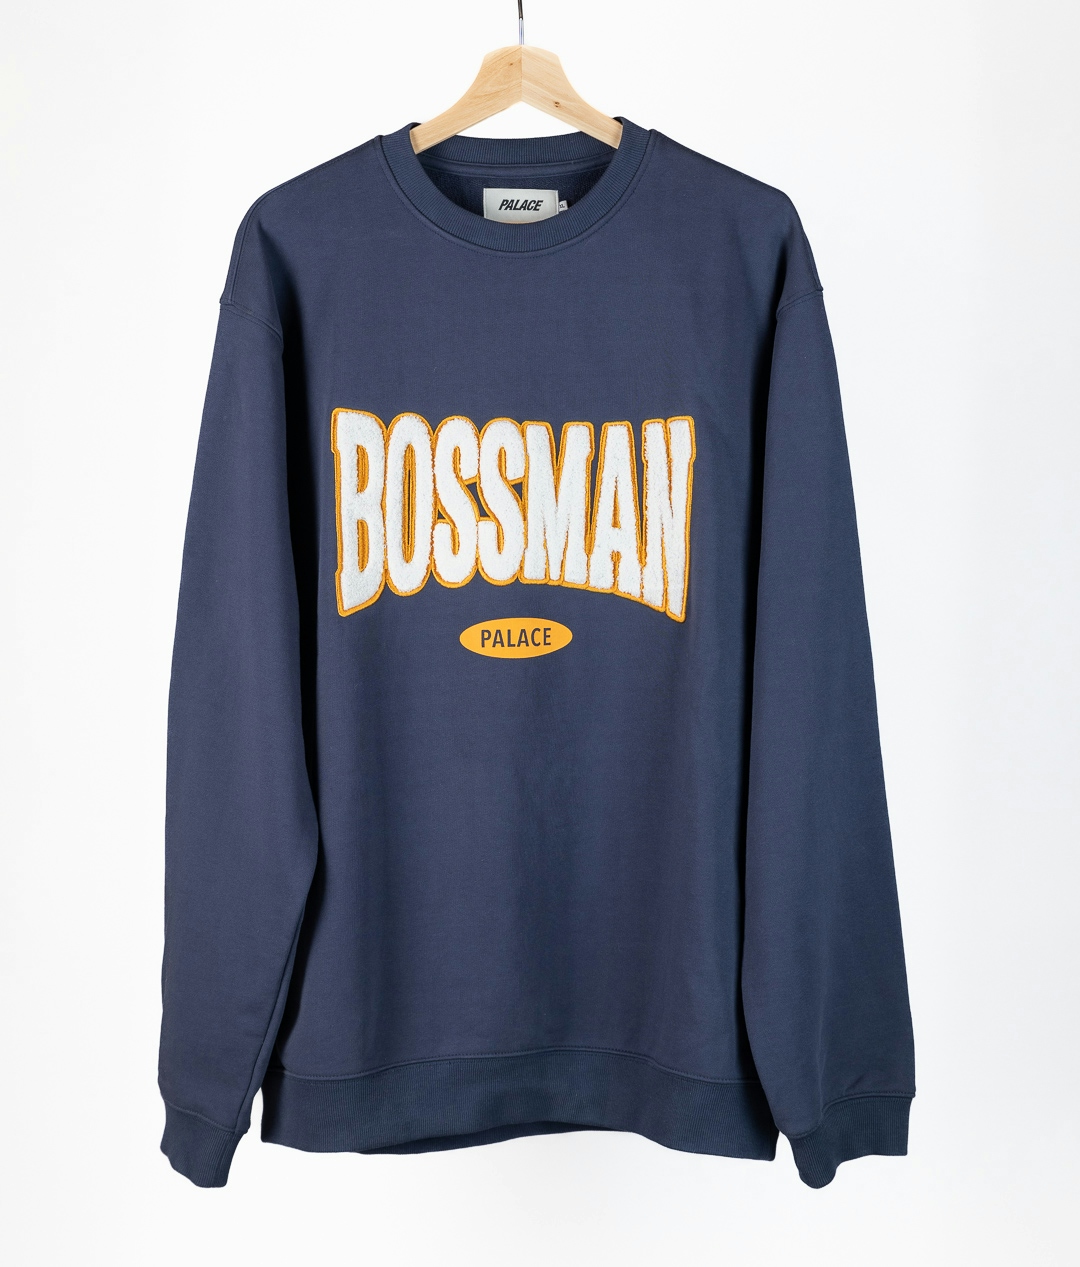 Vintage & Second Hand Palace Bossman Sweater Blue 1